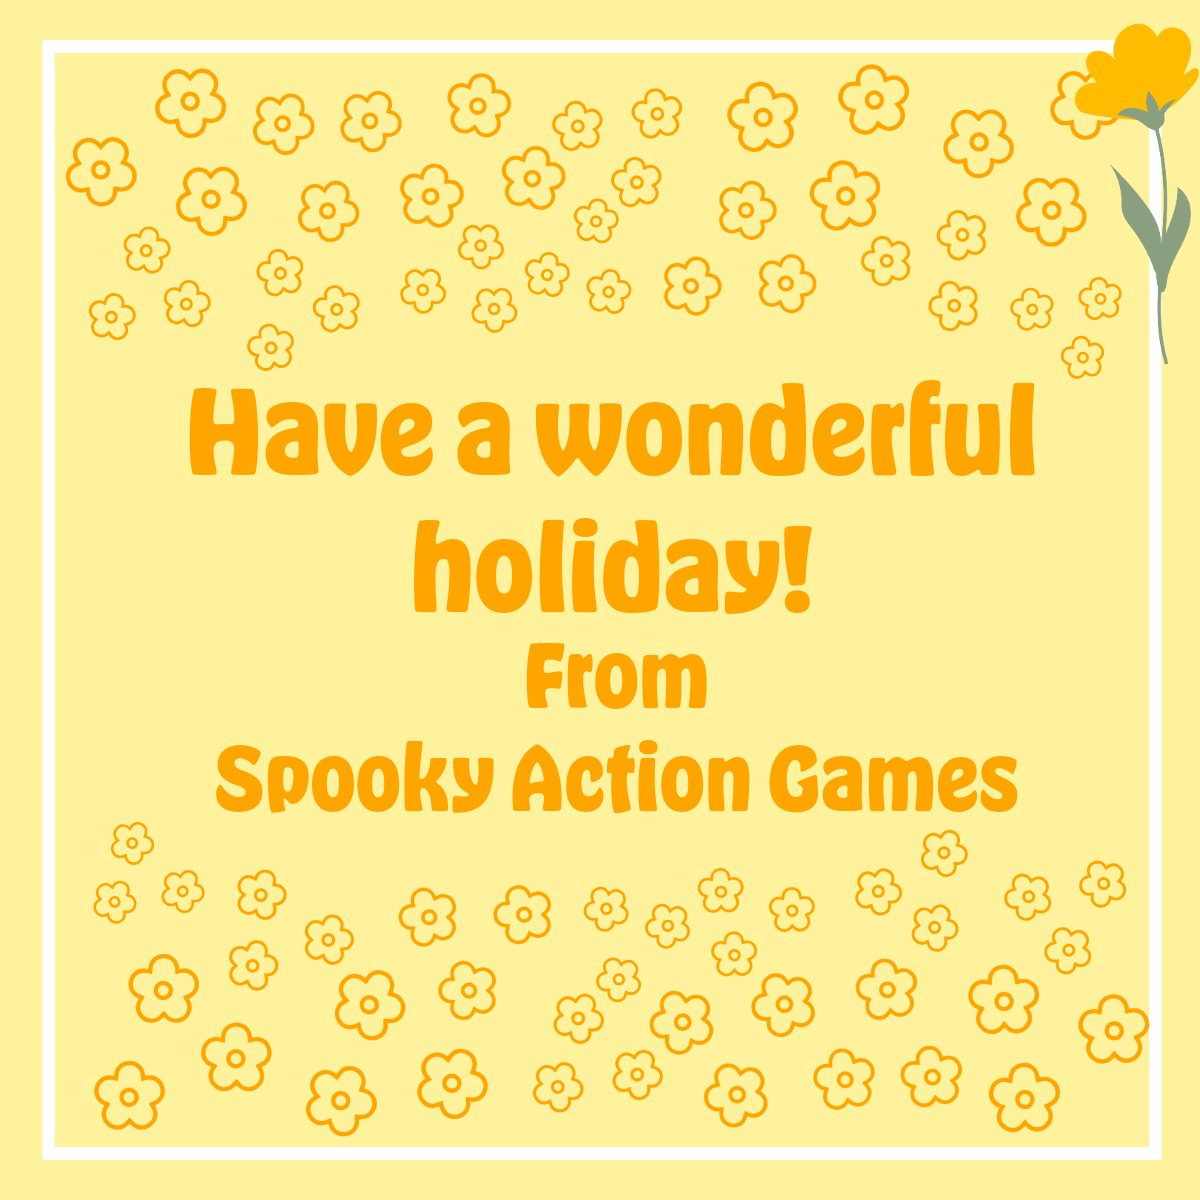 Happy Vappu! Hauskaa Vappua! Happy May Day! from Spooky Action Games #spookyactiongames #angelamaps #vappu #mayday #hauskaavappua